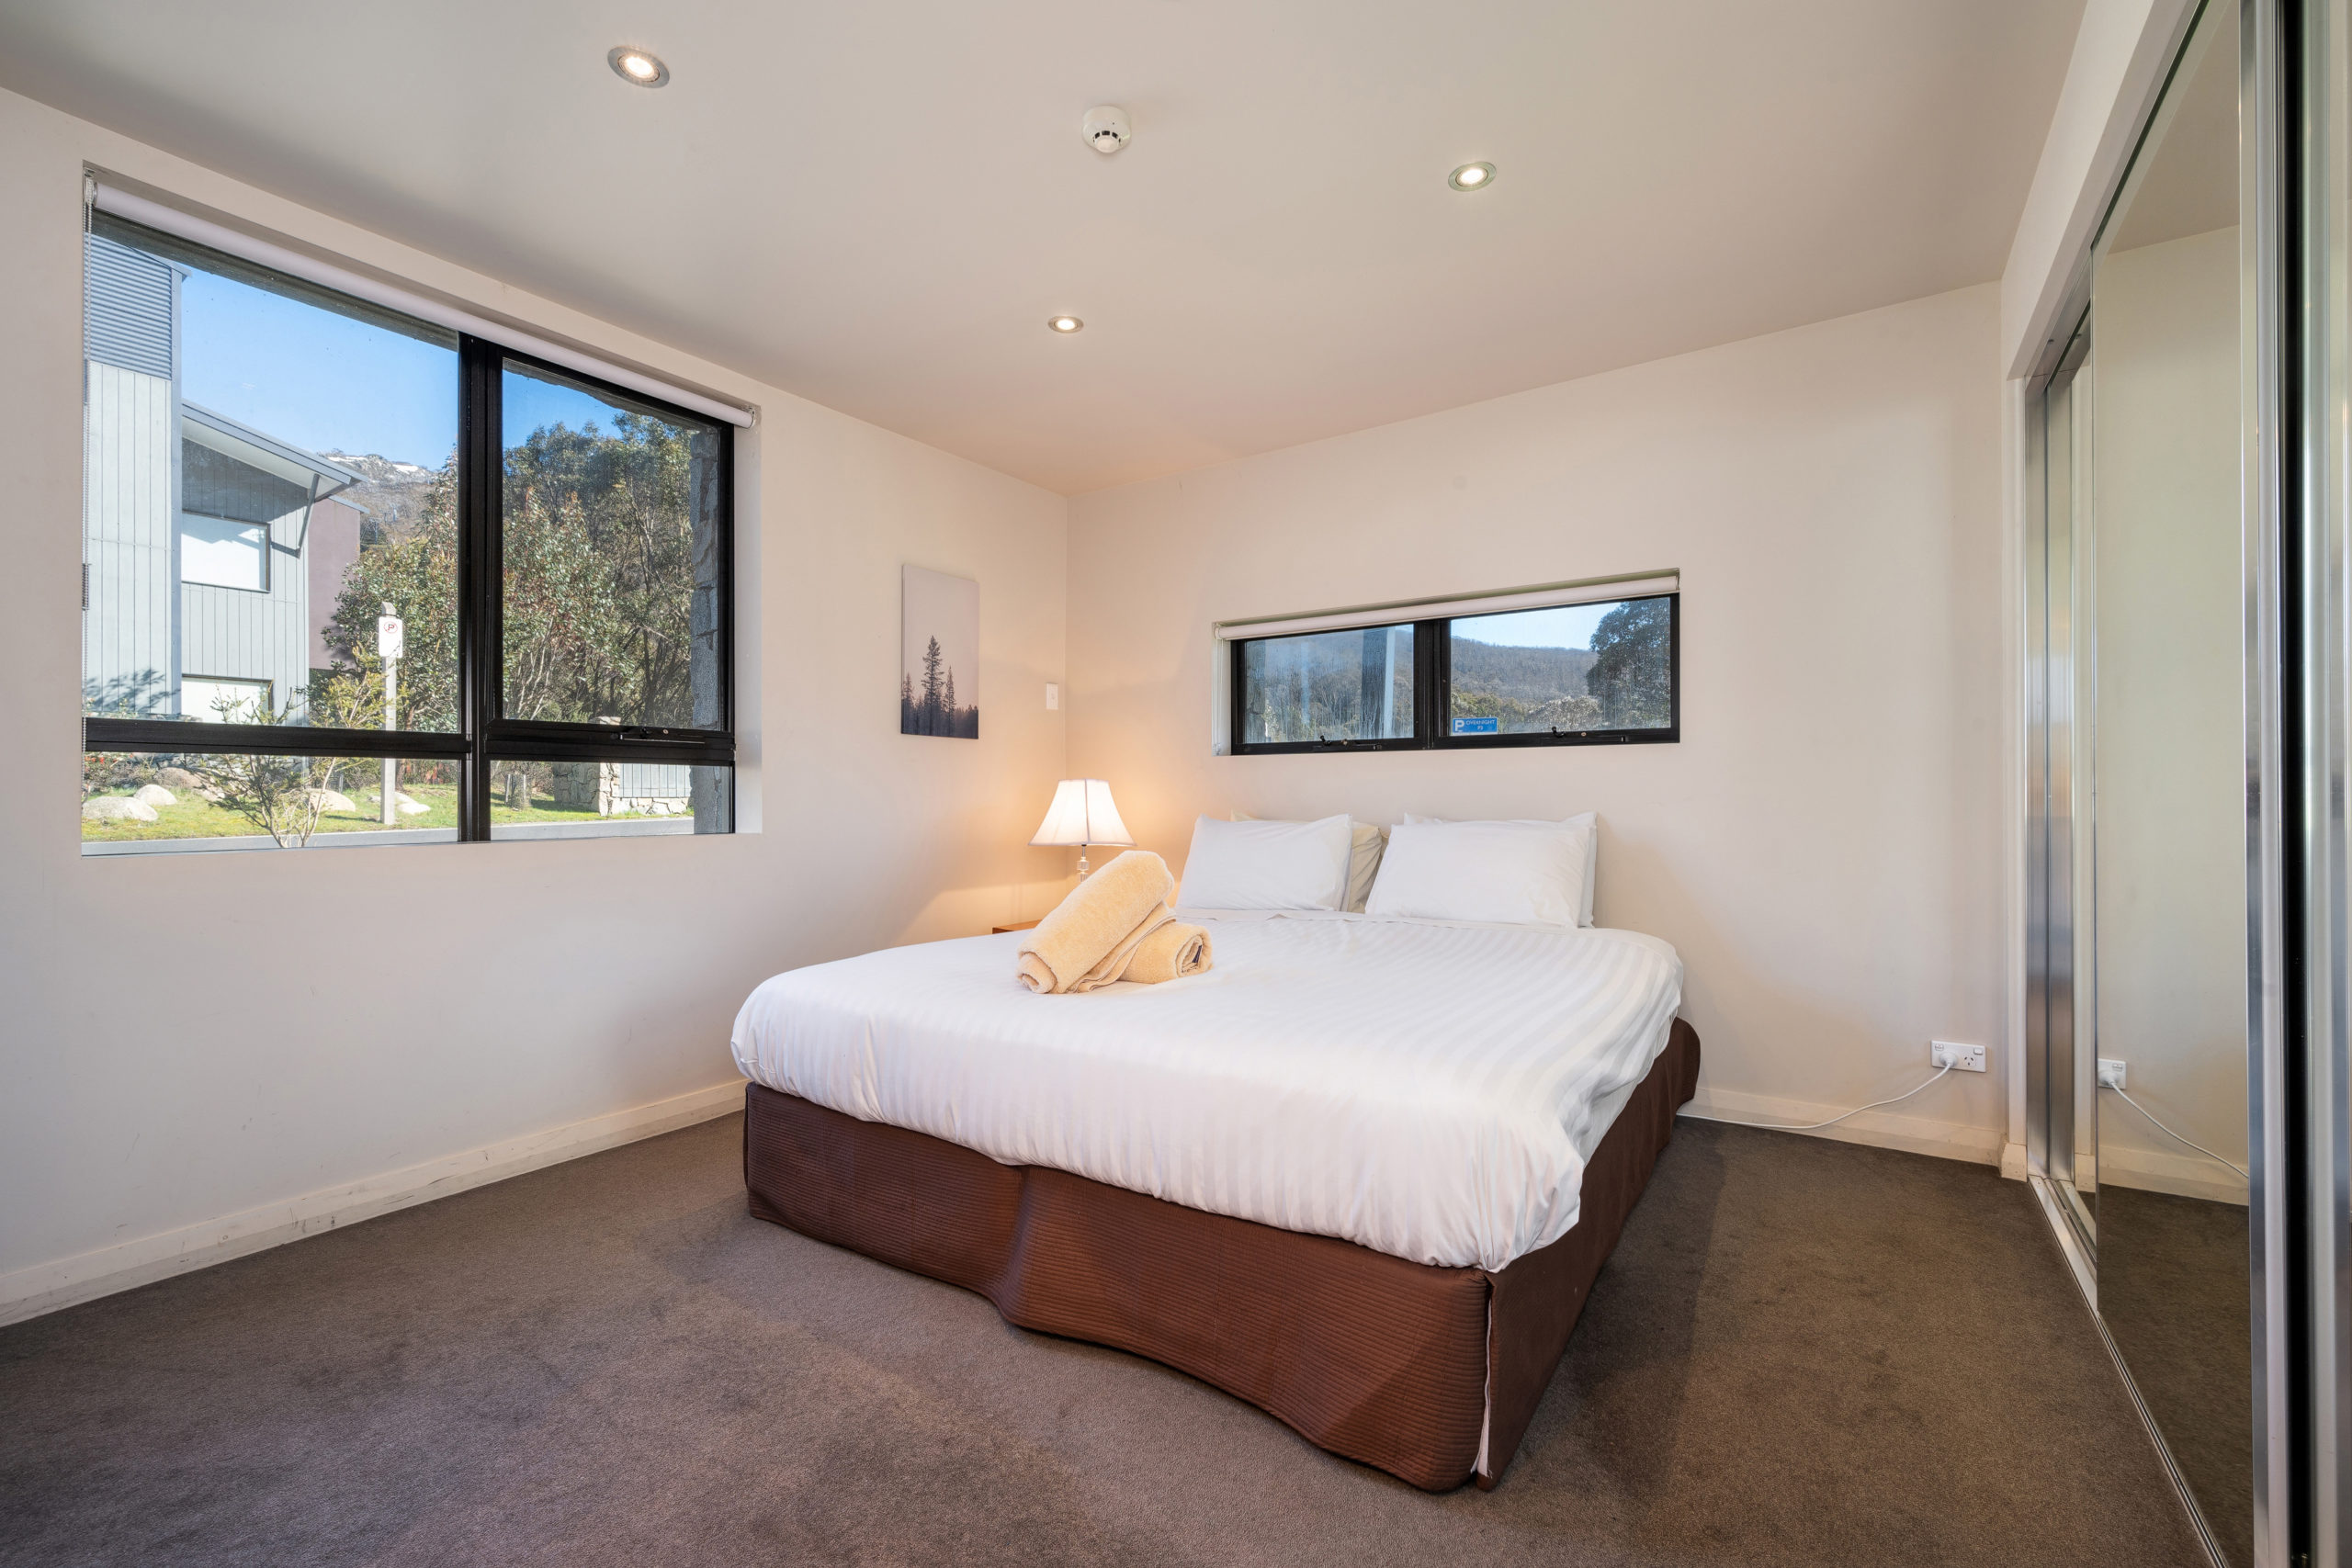 Large One Bedroom Plus Loft Chalet in Thredbo! – $975,000